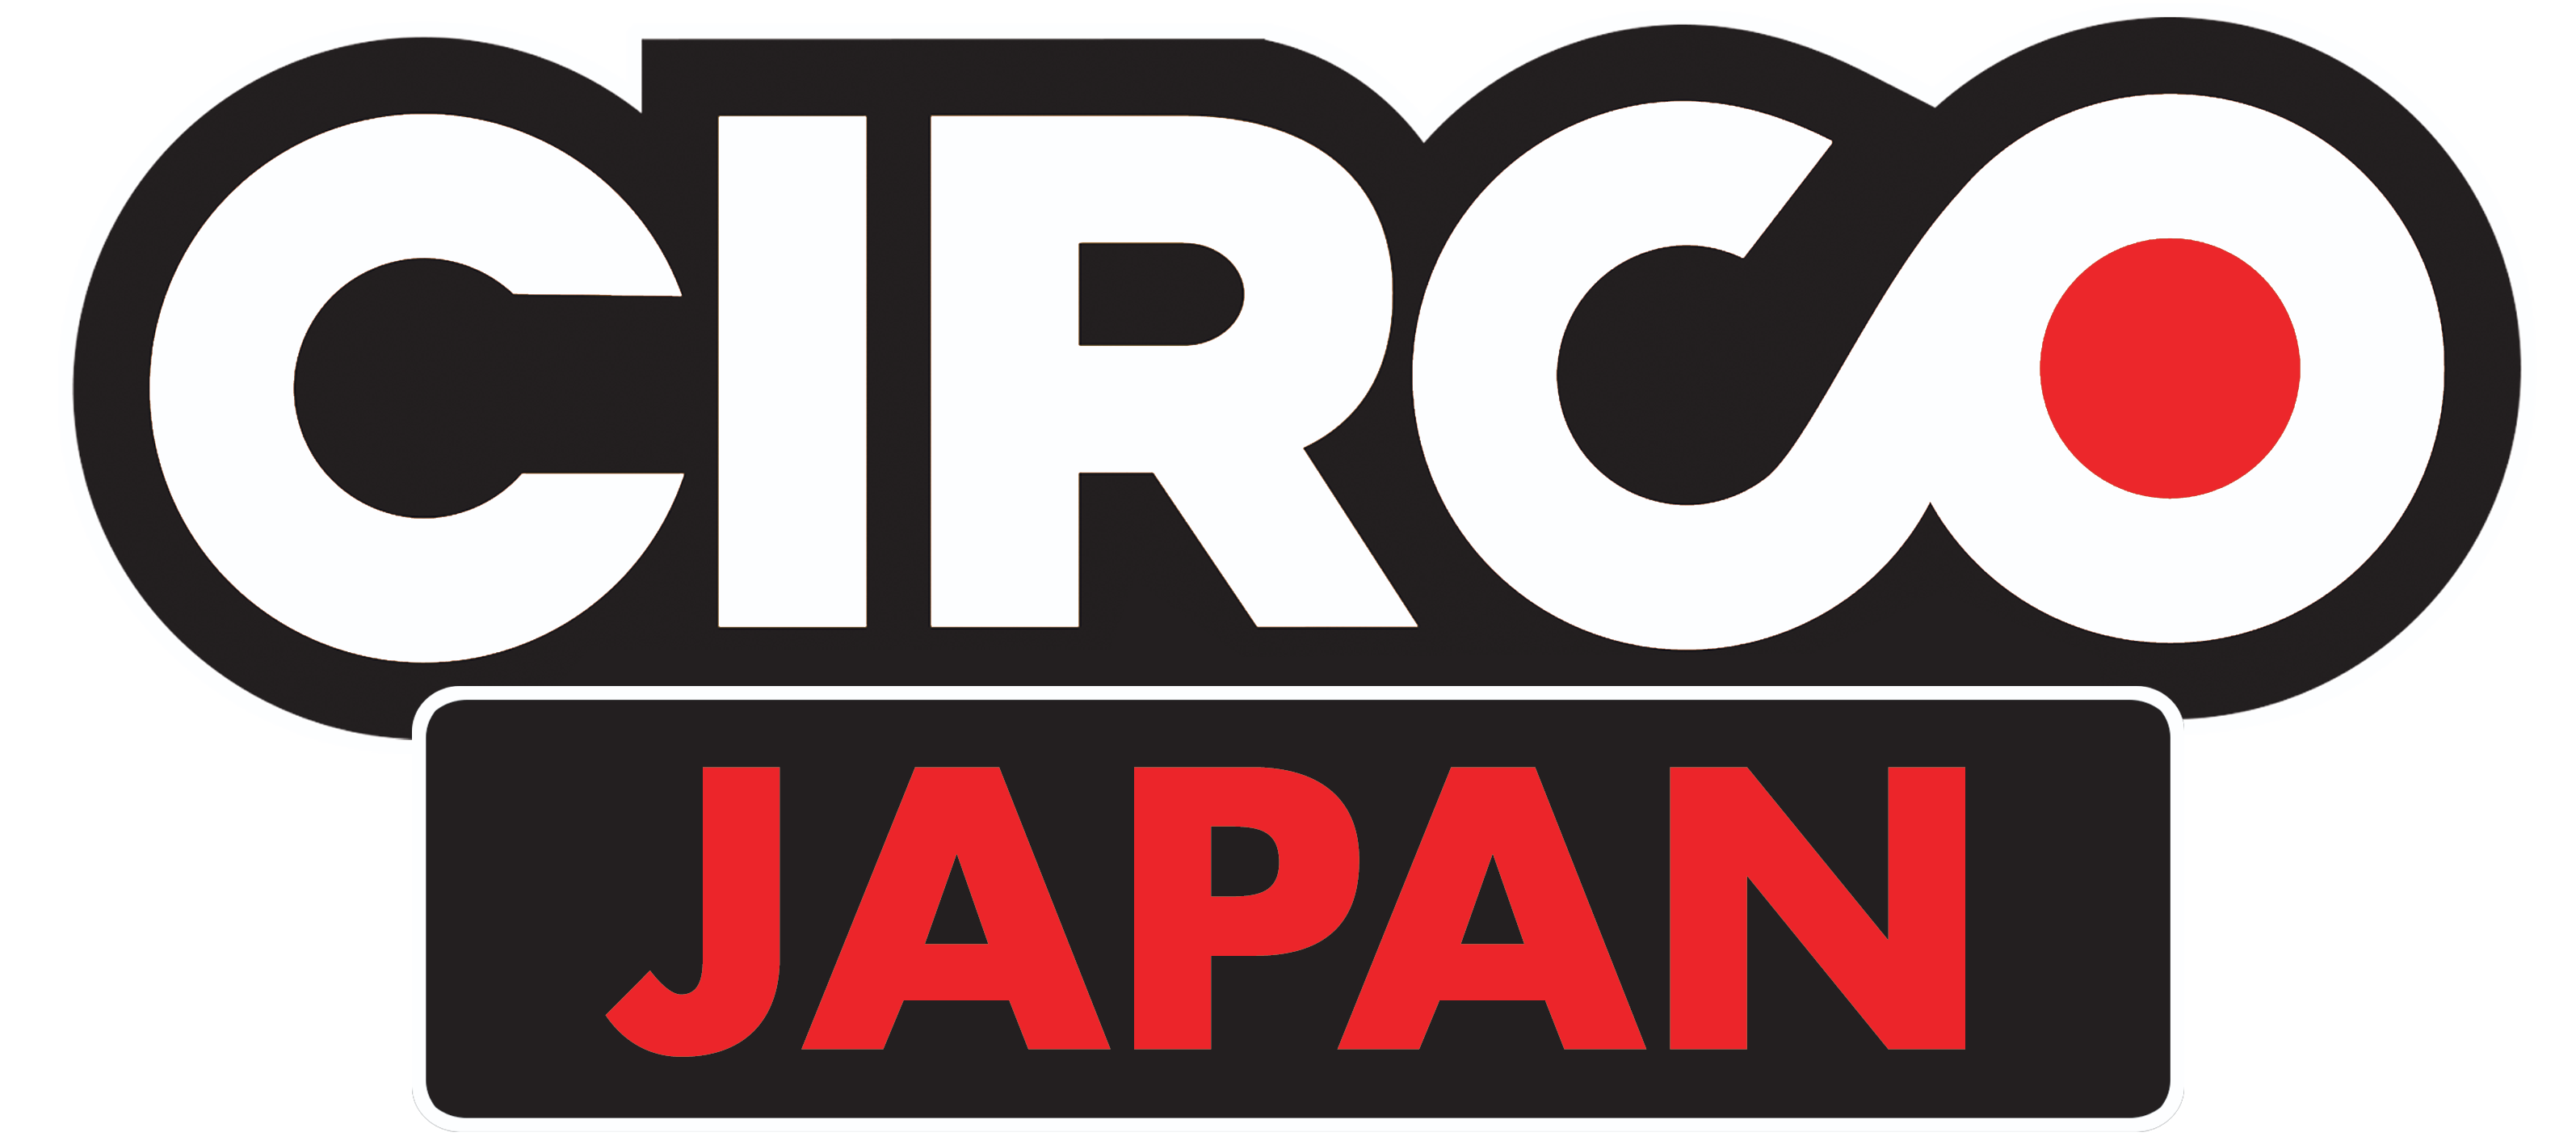 CIRCO JAPAN